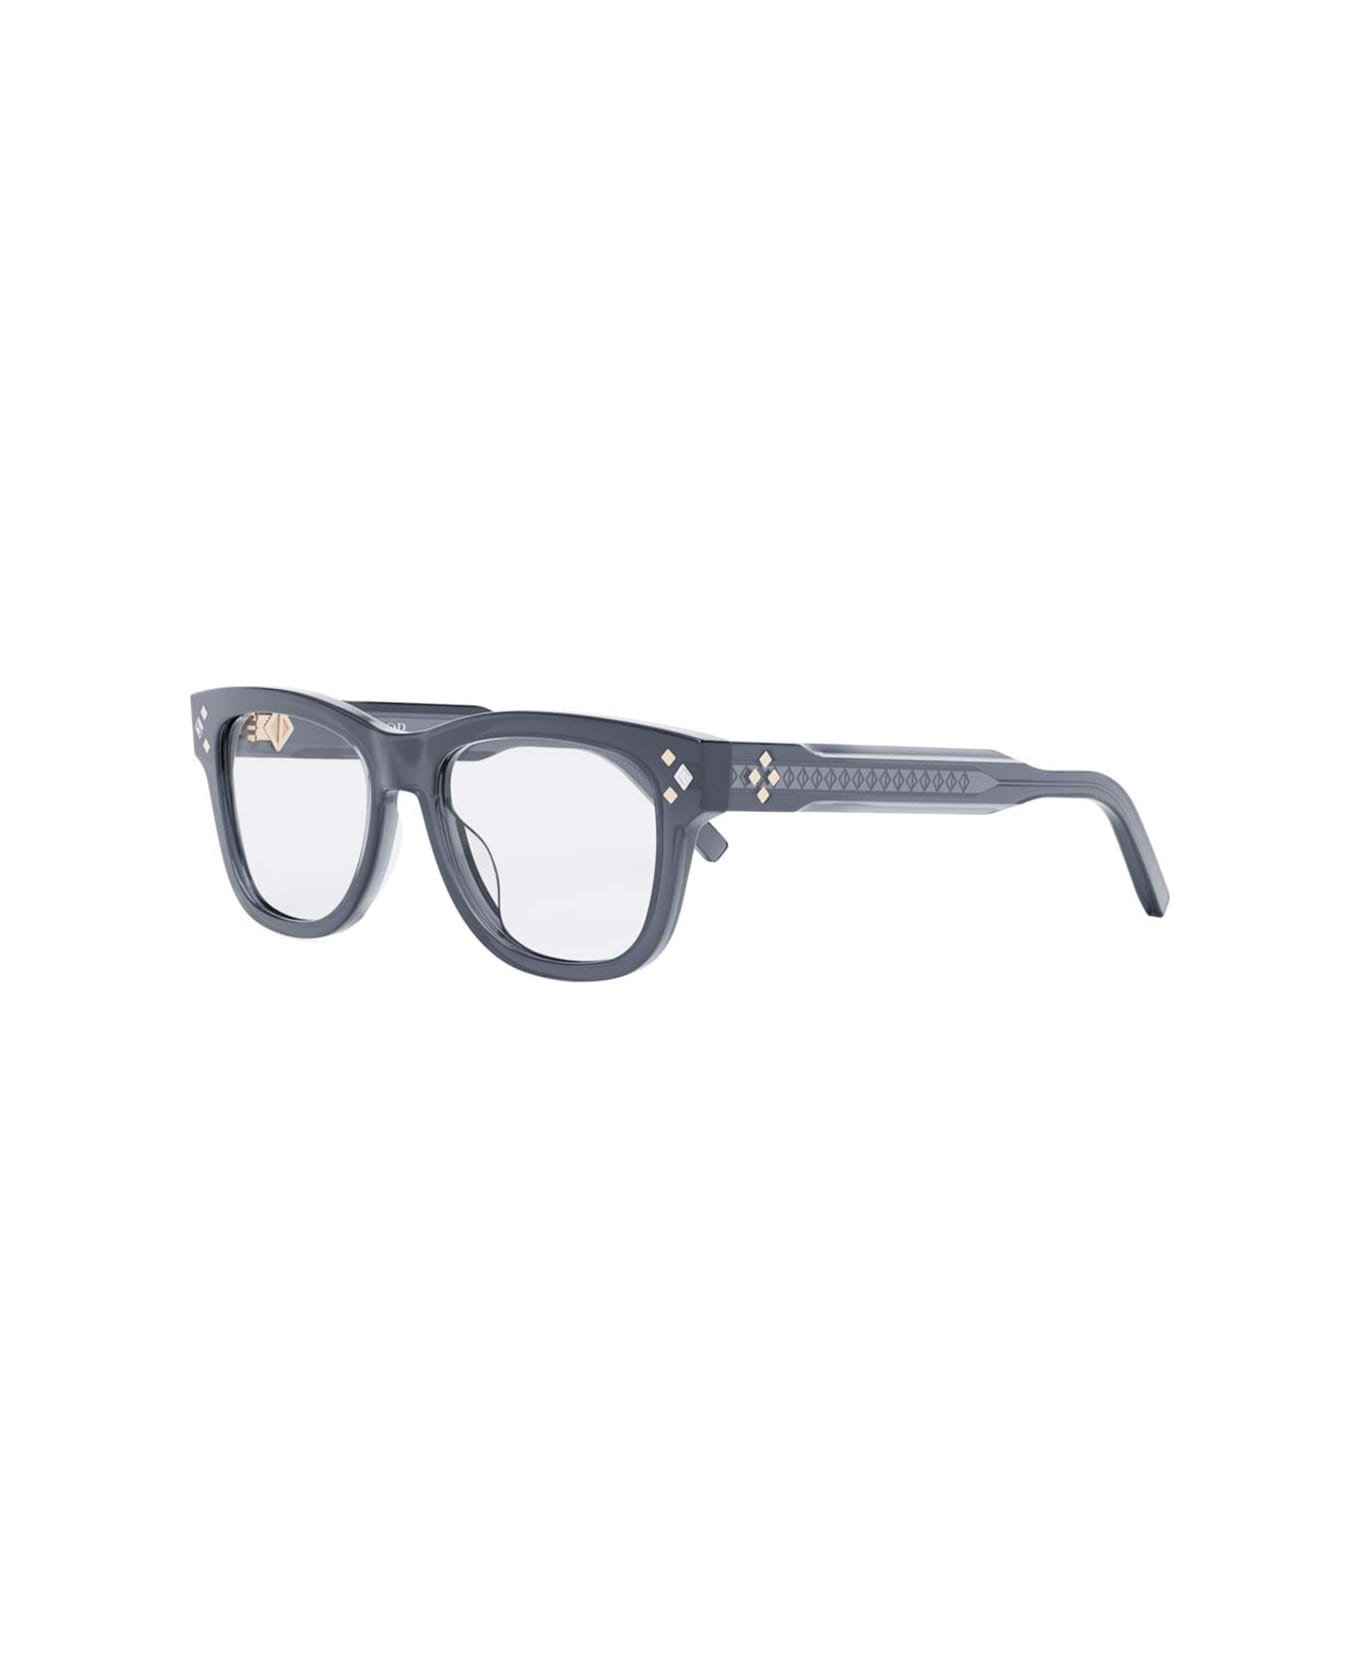 Dior Eyewear Glasses - Blu